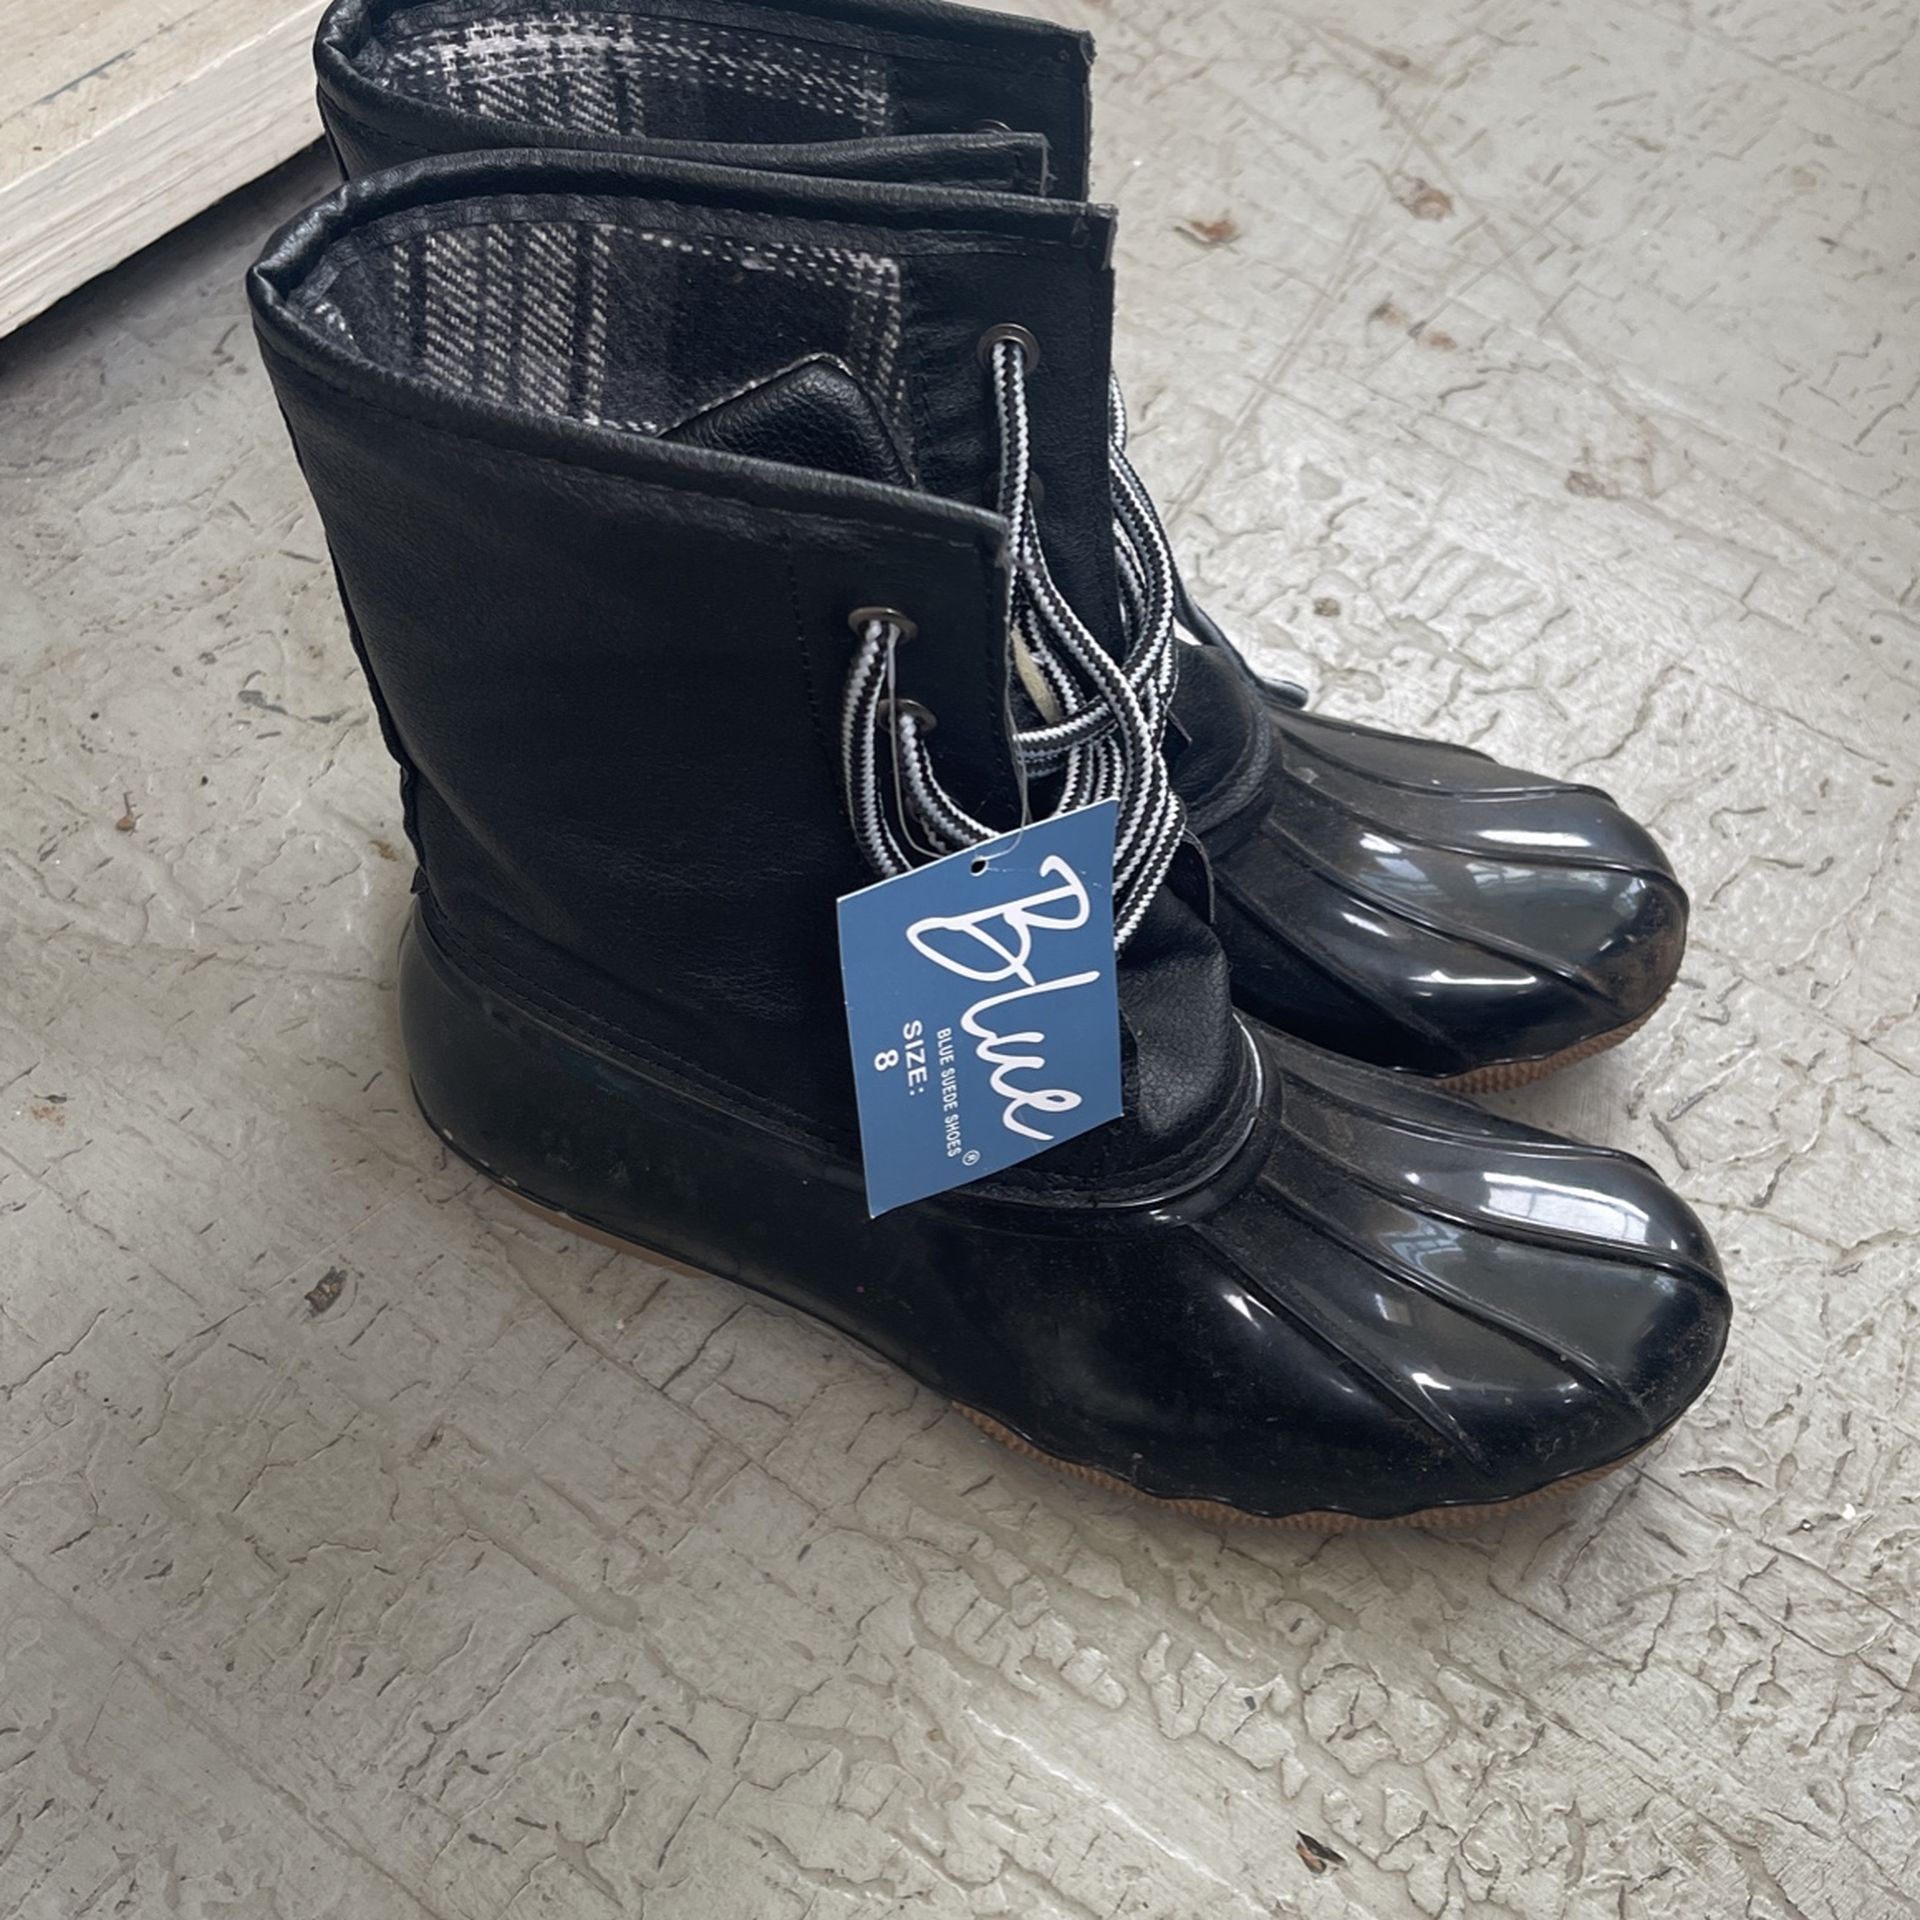 Woman’s Size 8 Rain snow Boots Black